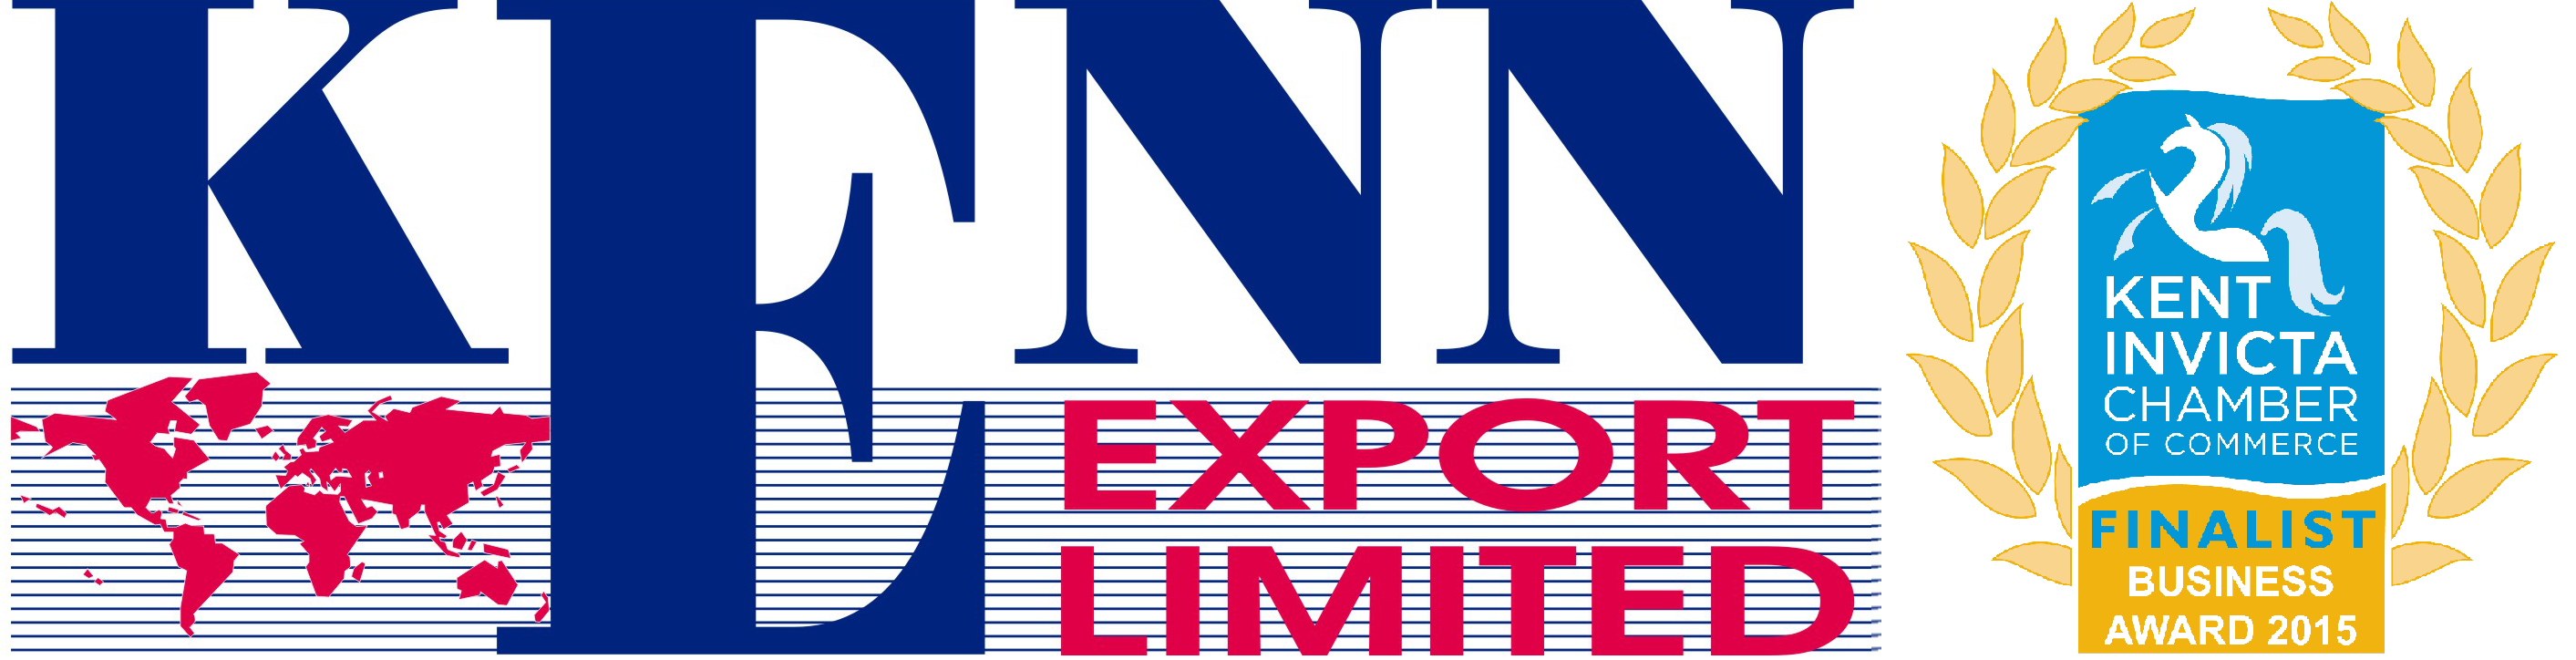 Kenn Export Limited